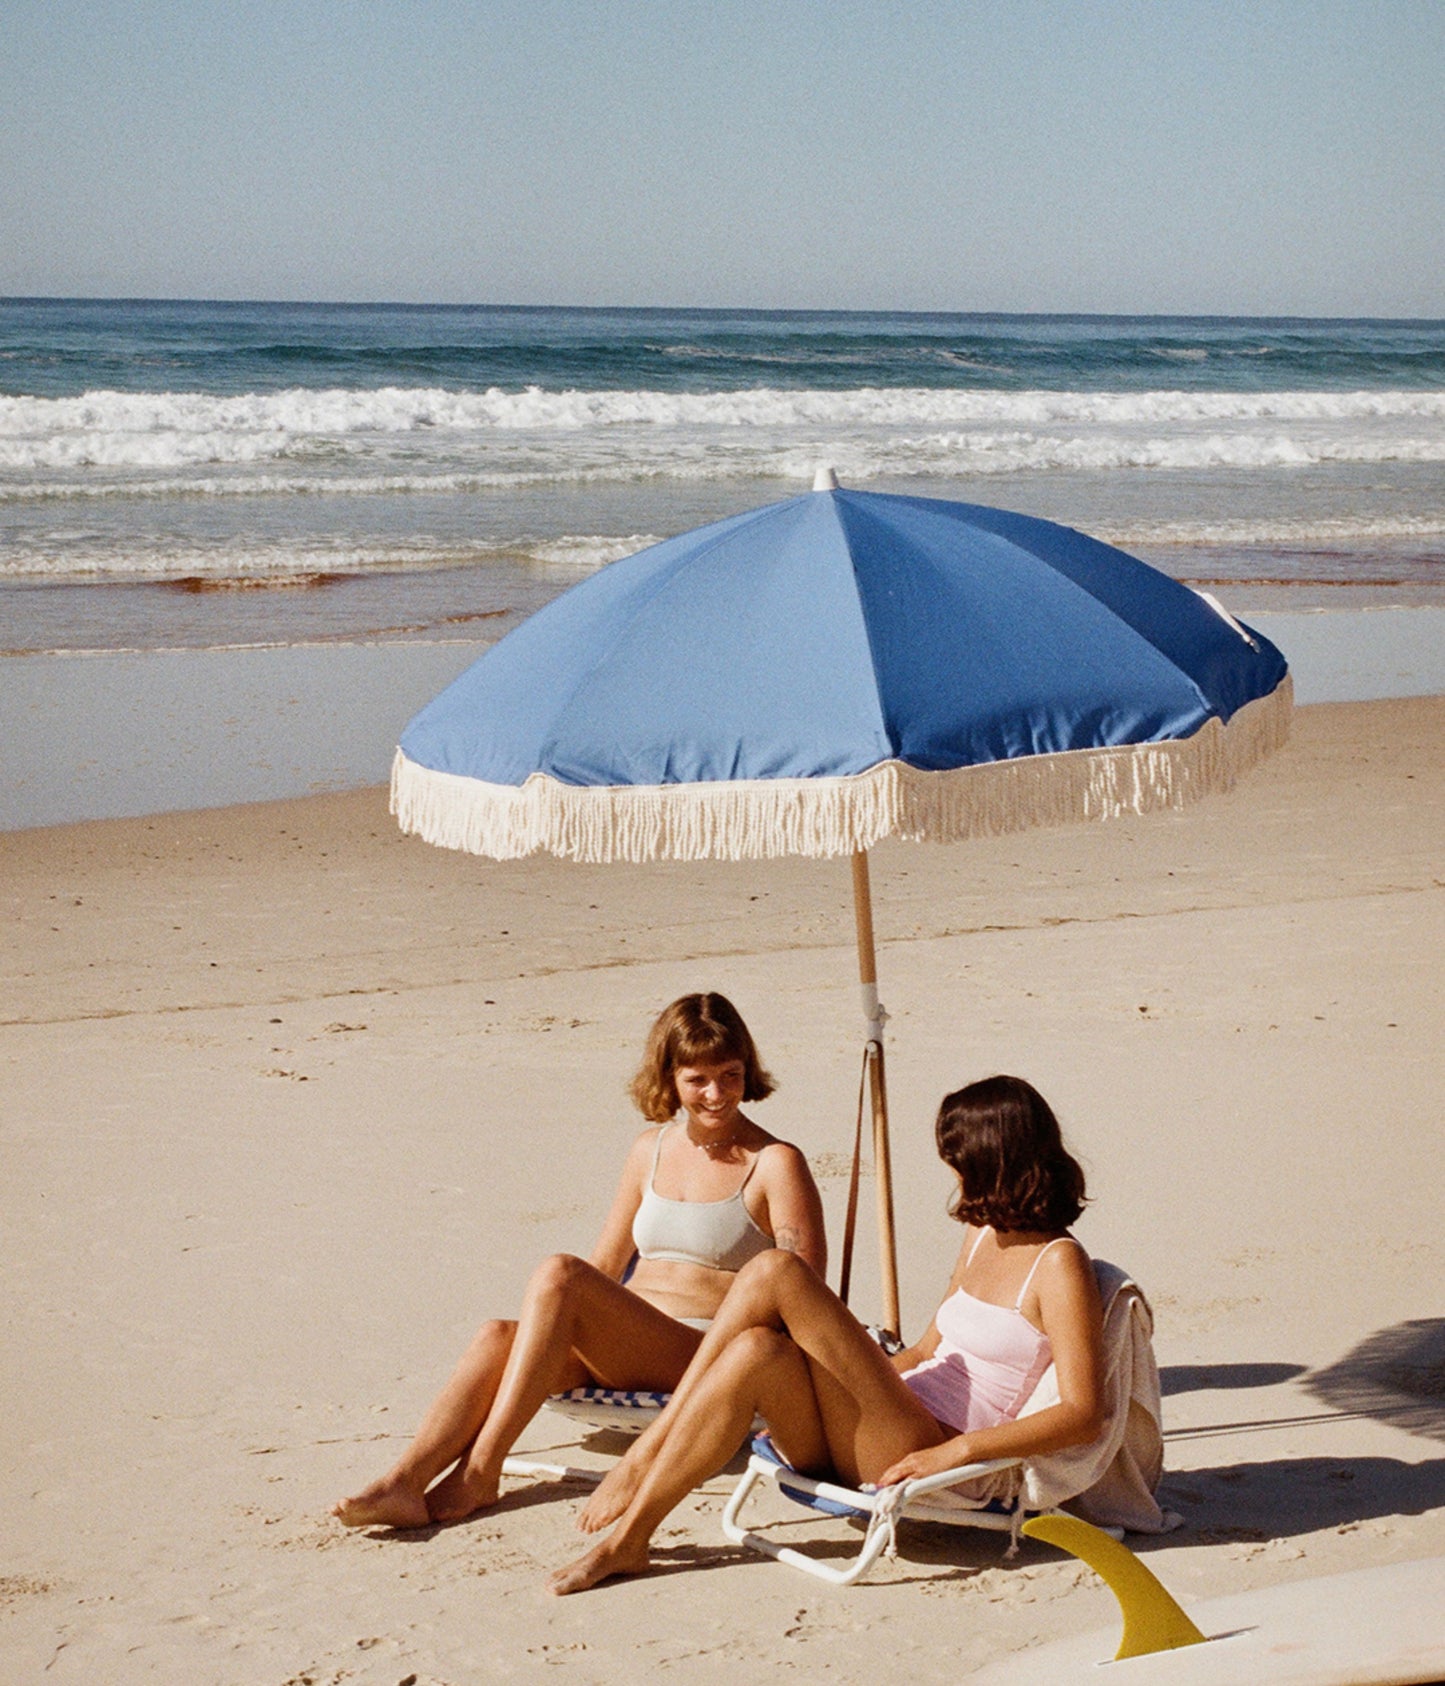 Pacific Beach Umbrella